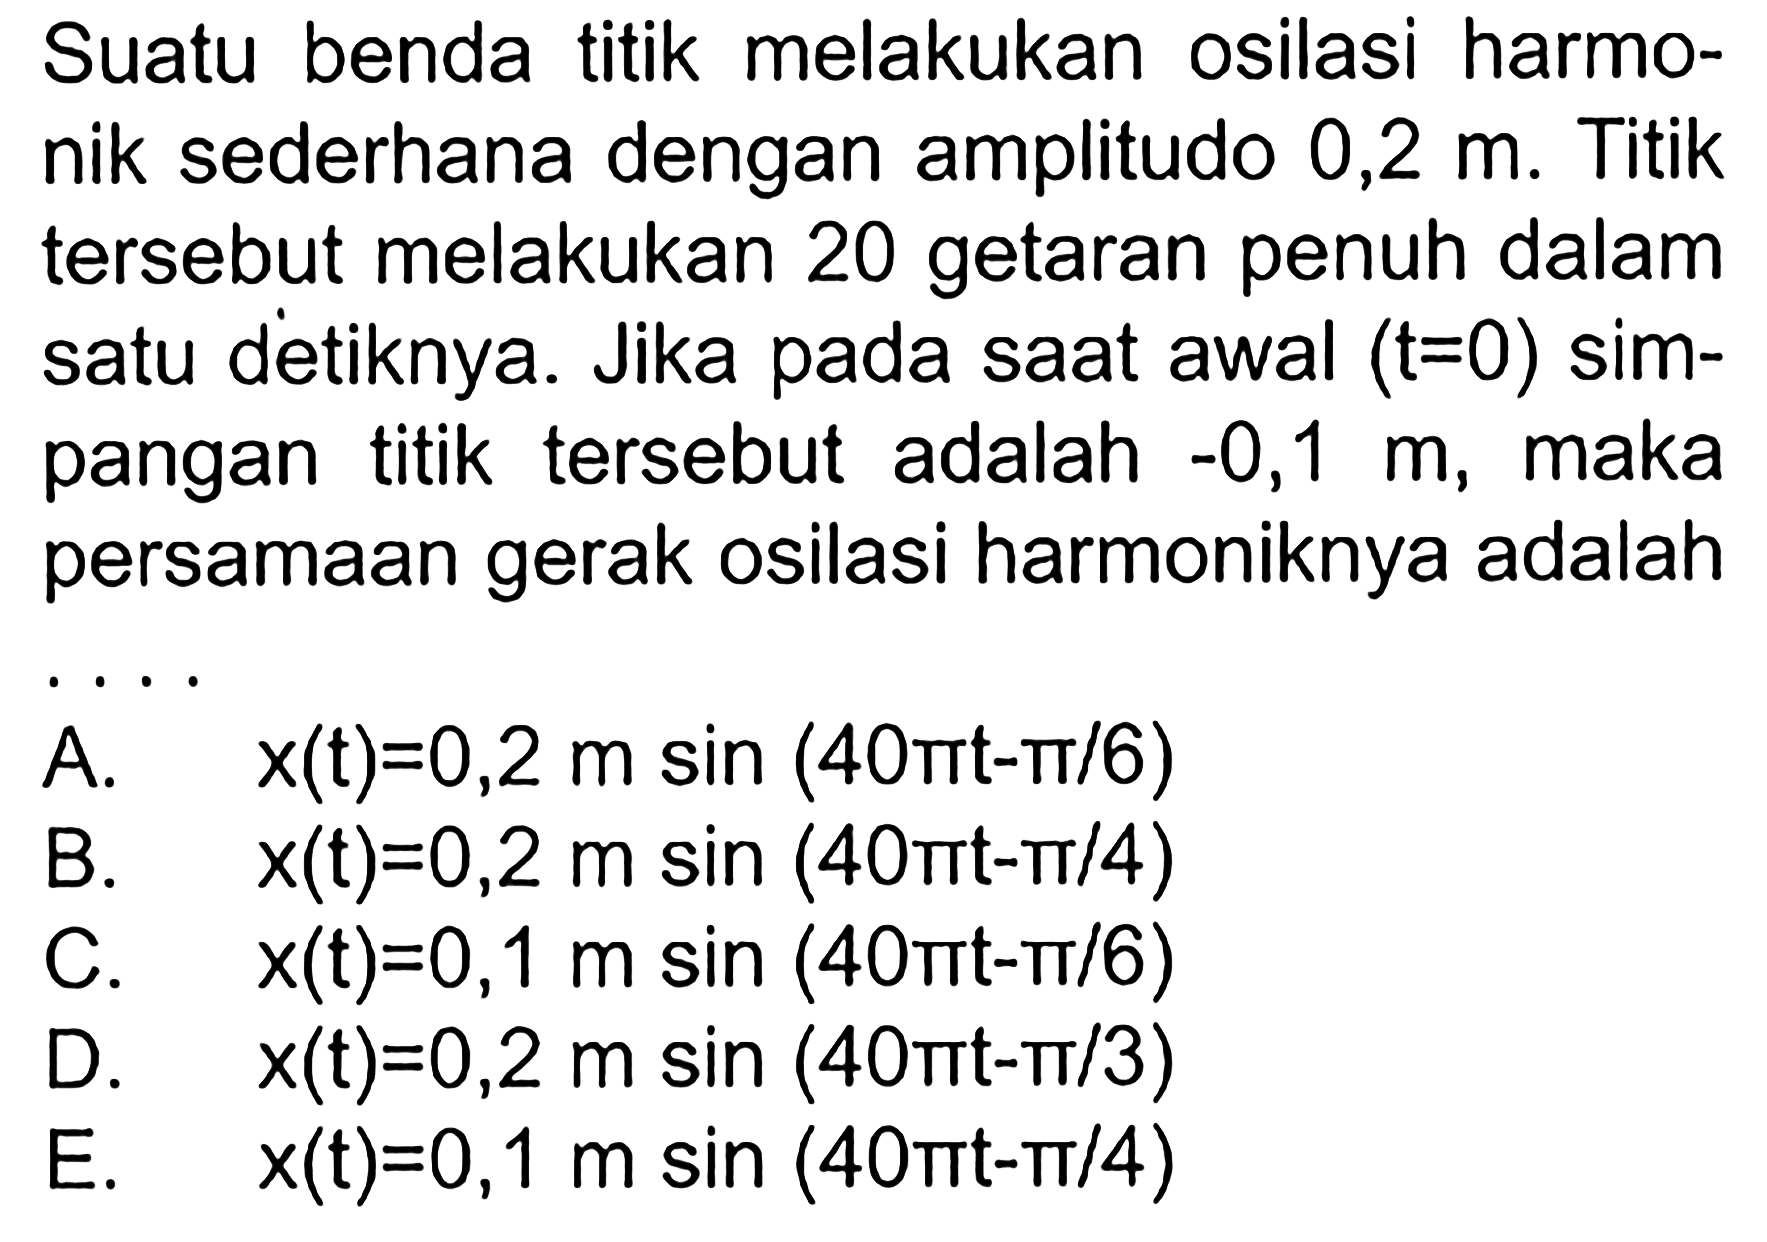 Suatu benda titik melakukan osilasi harmo-nik sederhana dengan amplitudo  0,2 m . Titiktersebut melakukan 20 getaran penuh dalamsatu detiknya. Jika pada saat awal  (t=0)  sim-pangan titik tersebut adalah  -0,1 m , makapersamaan gerak osilasi harmoniknya adalahA.  x(t)=0,2 m sin (40 mt-pi / 6) B.  x(t)=0,2 m sin (40 pi t-pi / 4) C.  x(t)=0,1 m sin (40 pi t-pi / 6) D.  x(t)=0,2 m sin (40 pi t-pi / 3) E.  x(t)=0,1 m sin (40 pi t-pi / 4) 